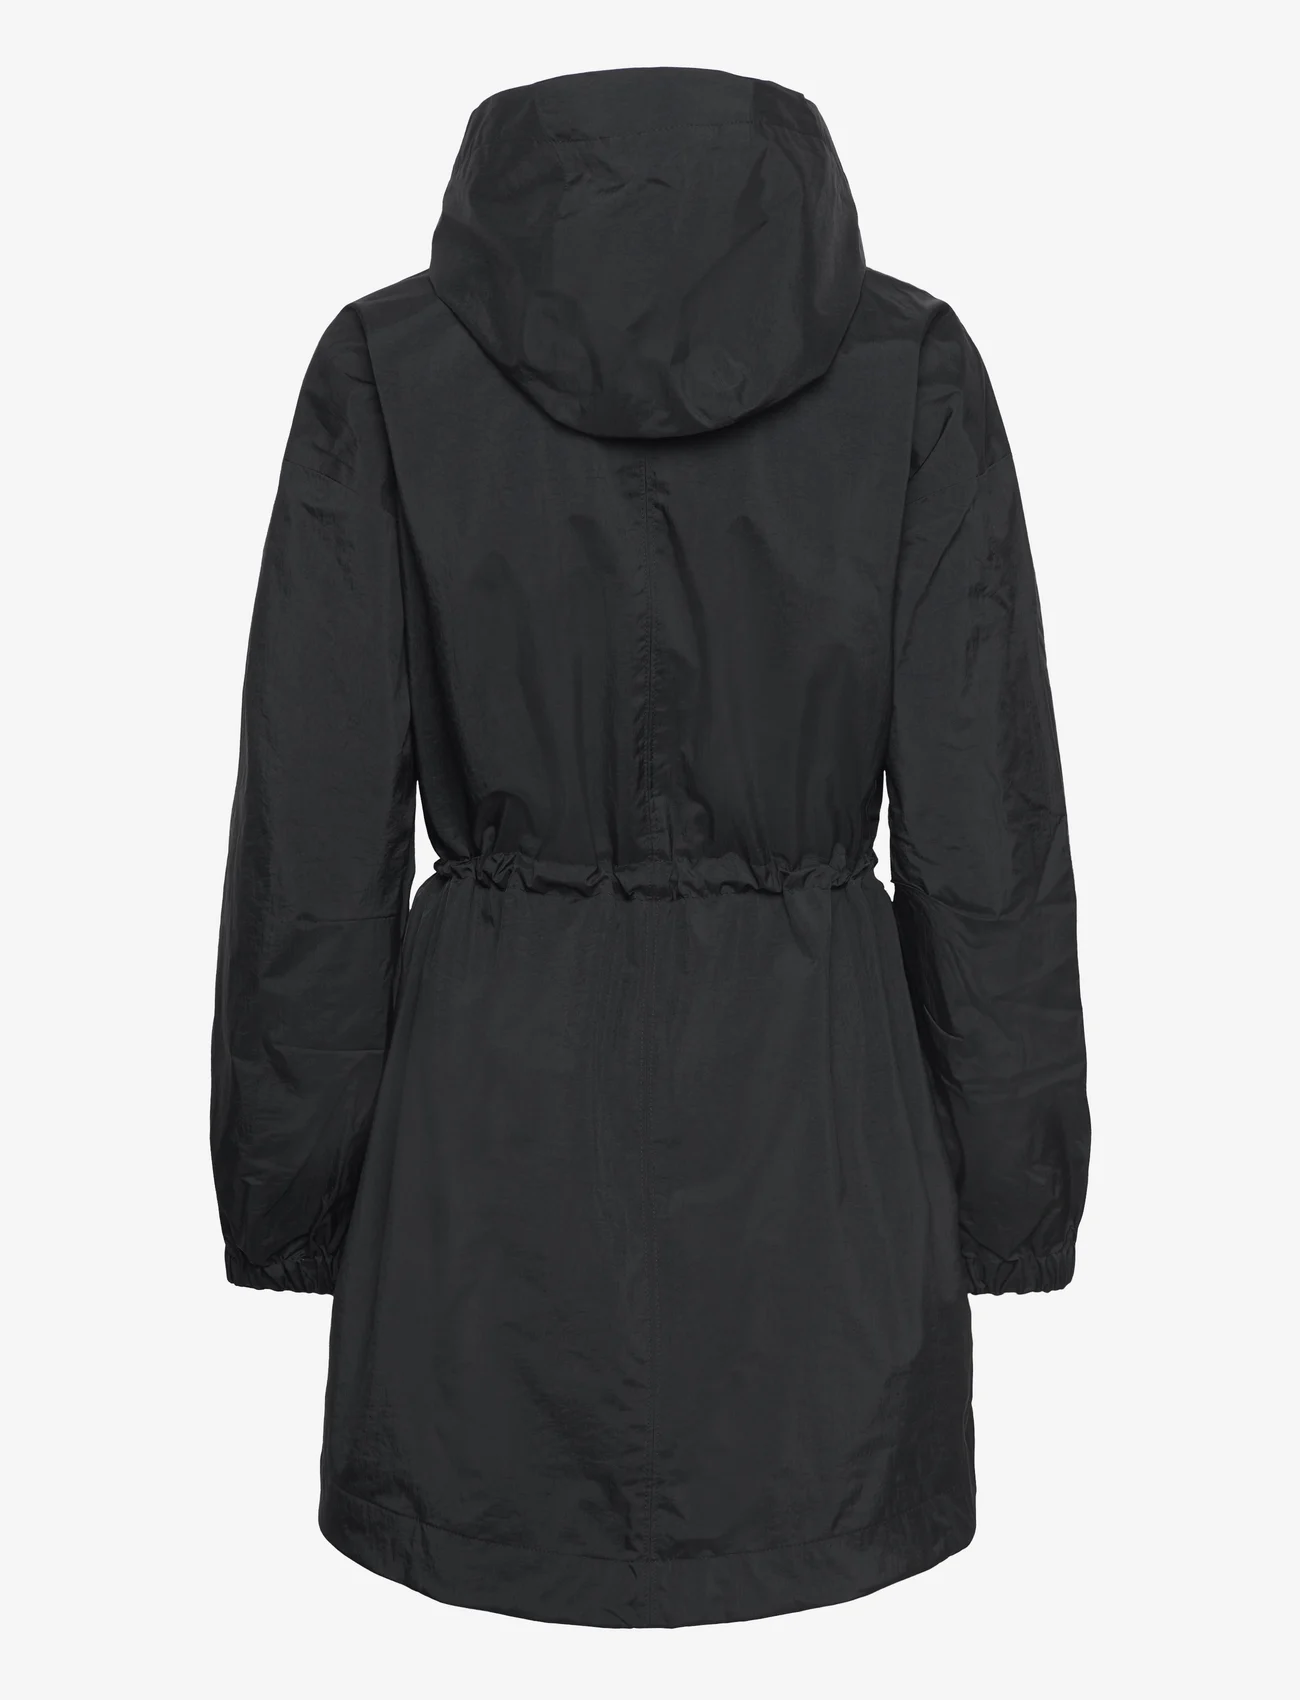 Columbia Sportswear - Splash Side Jacket - sadetakit - black crinkle - 1